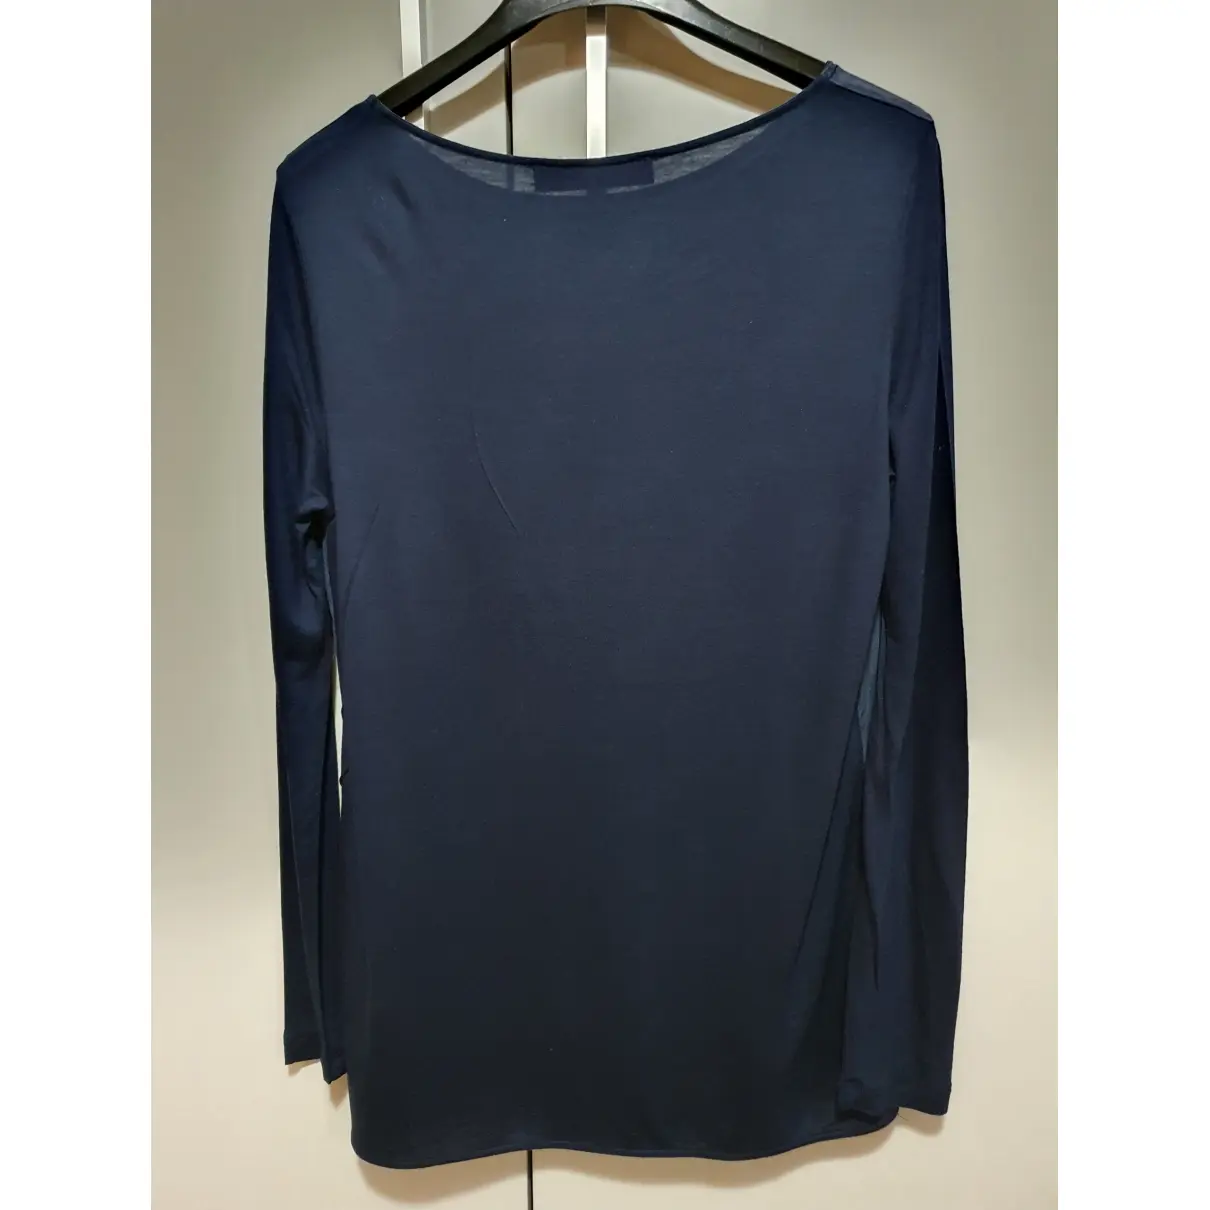 Buy Hallhuber Silk blouse online